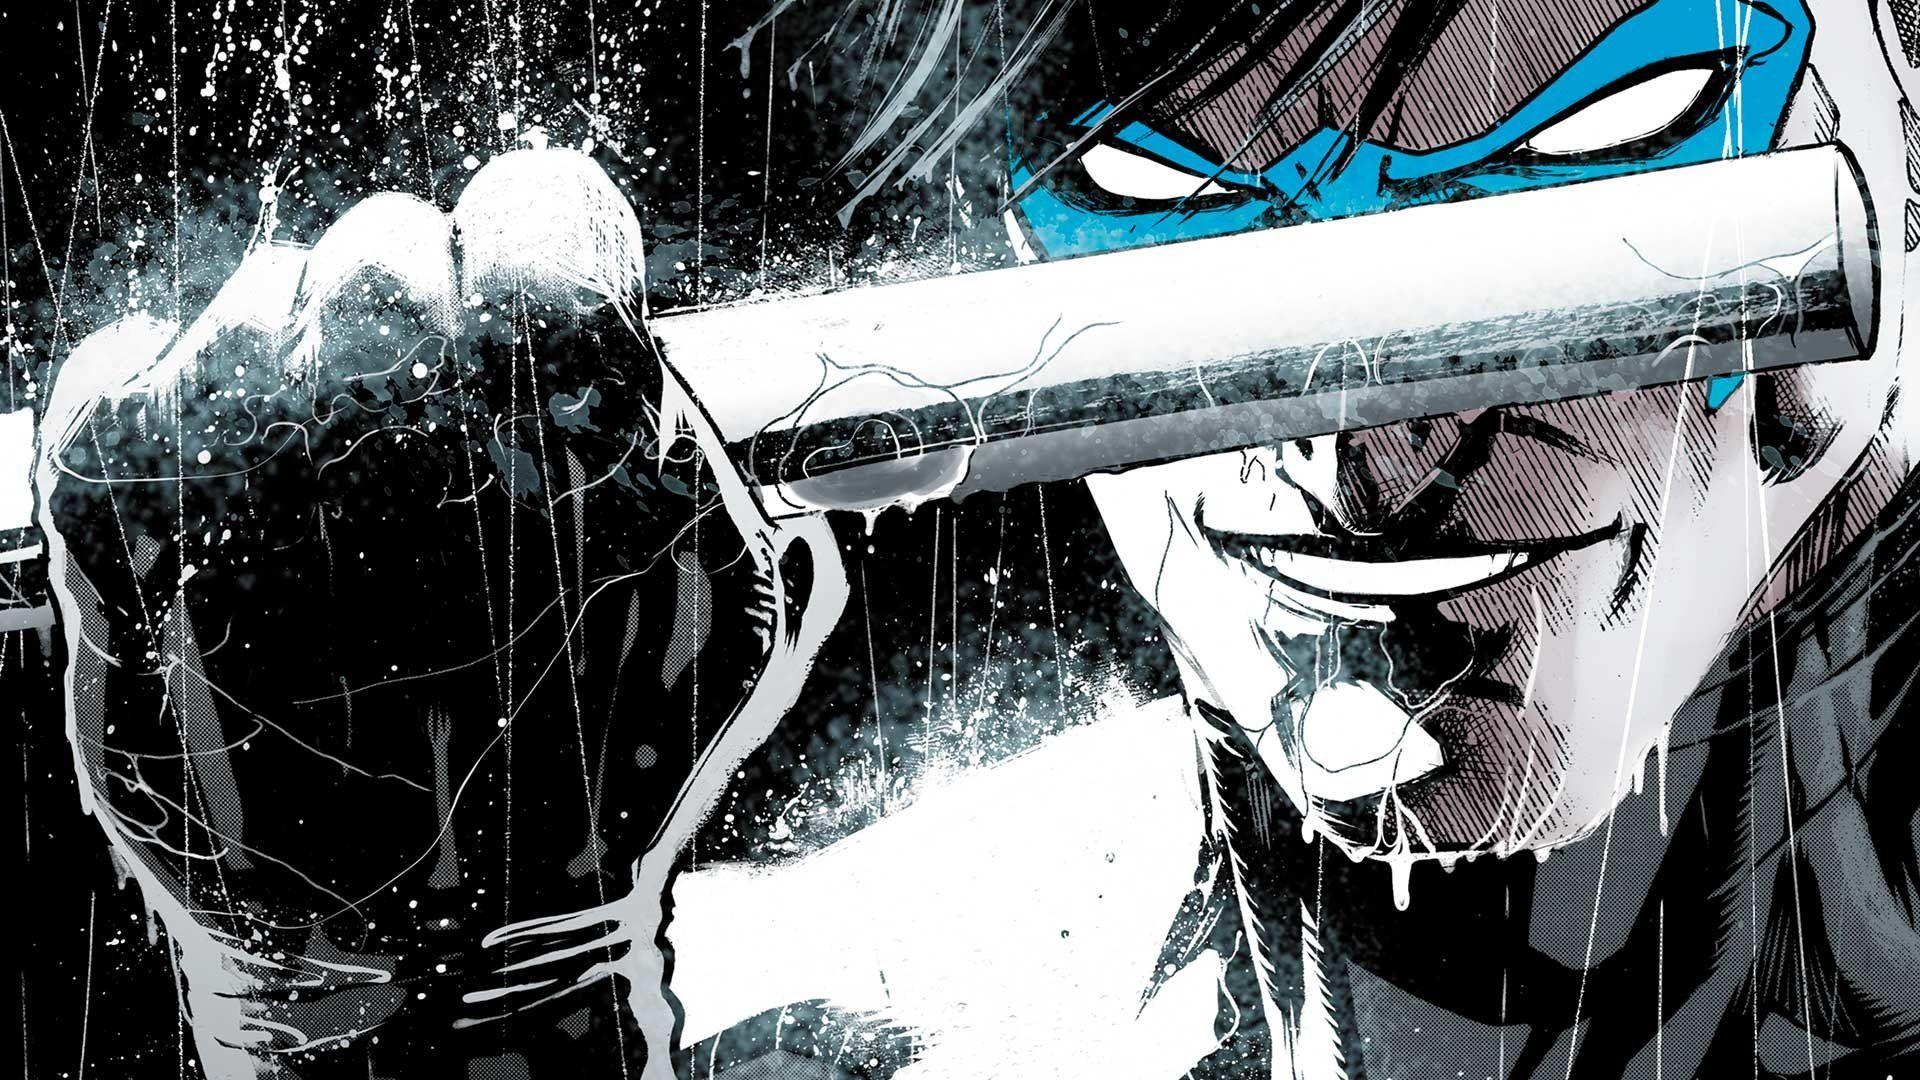 Wallpaper Nightwing 77 2020 Nightwing 2016 77 Nightwing Dick Grayson  Batman Background  Download Free Image